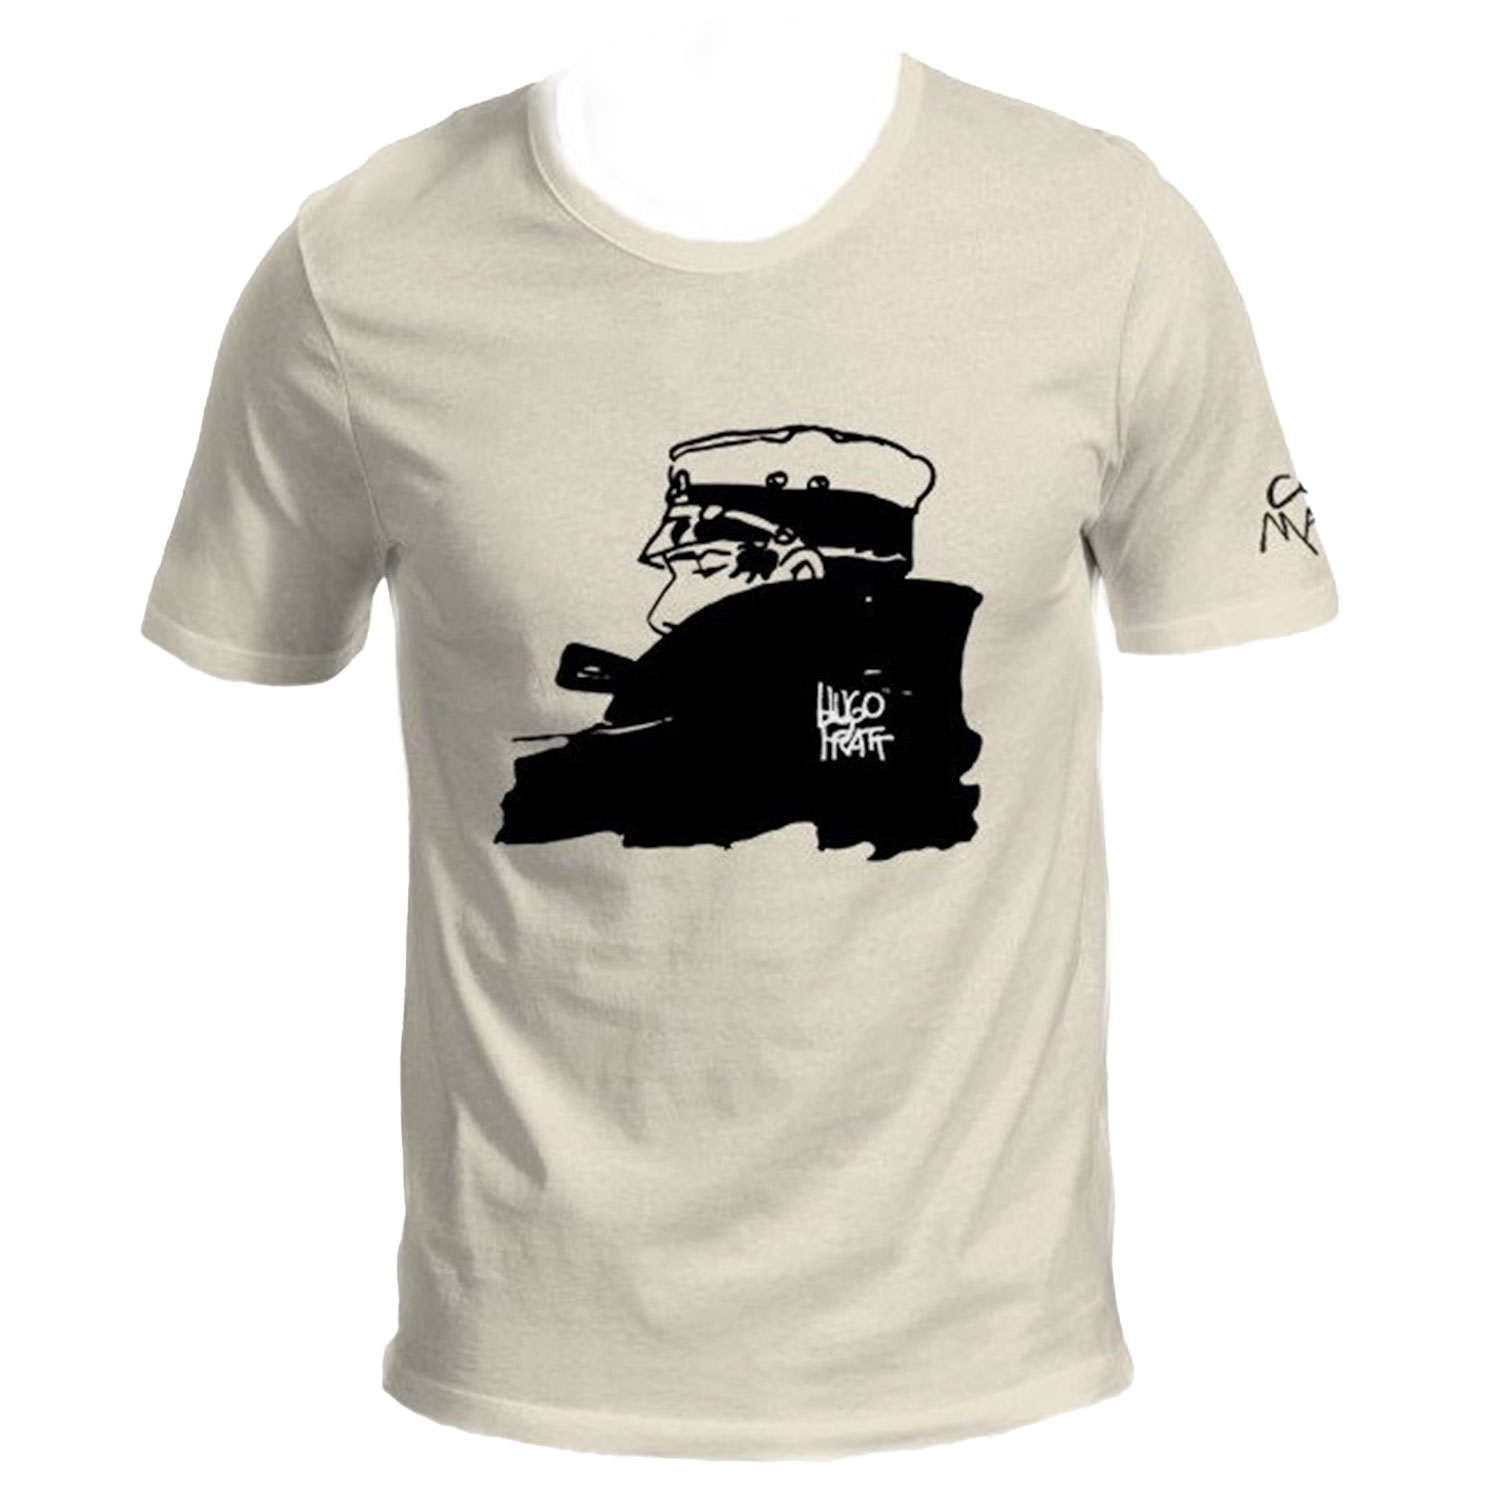 T-shirt Hugo Pratt :  Corto Maltese , Nocturne - Ecru - Taille S